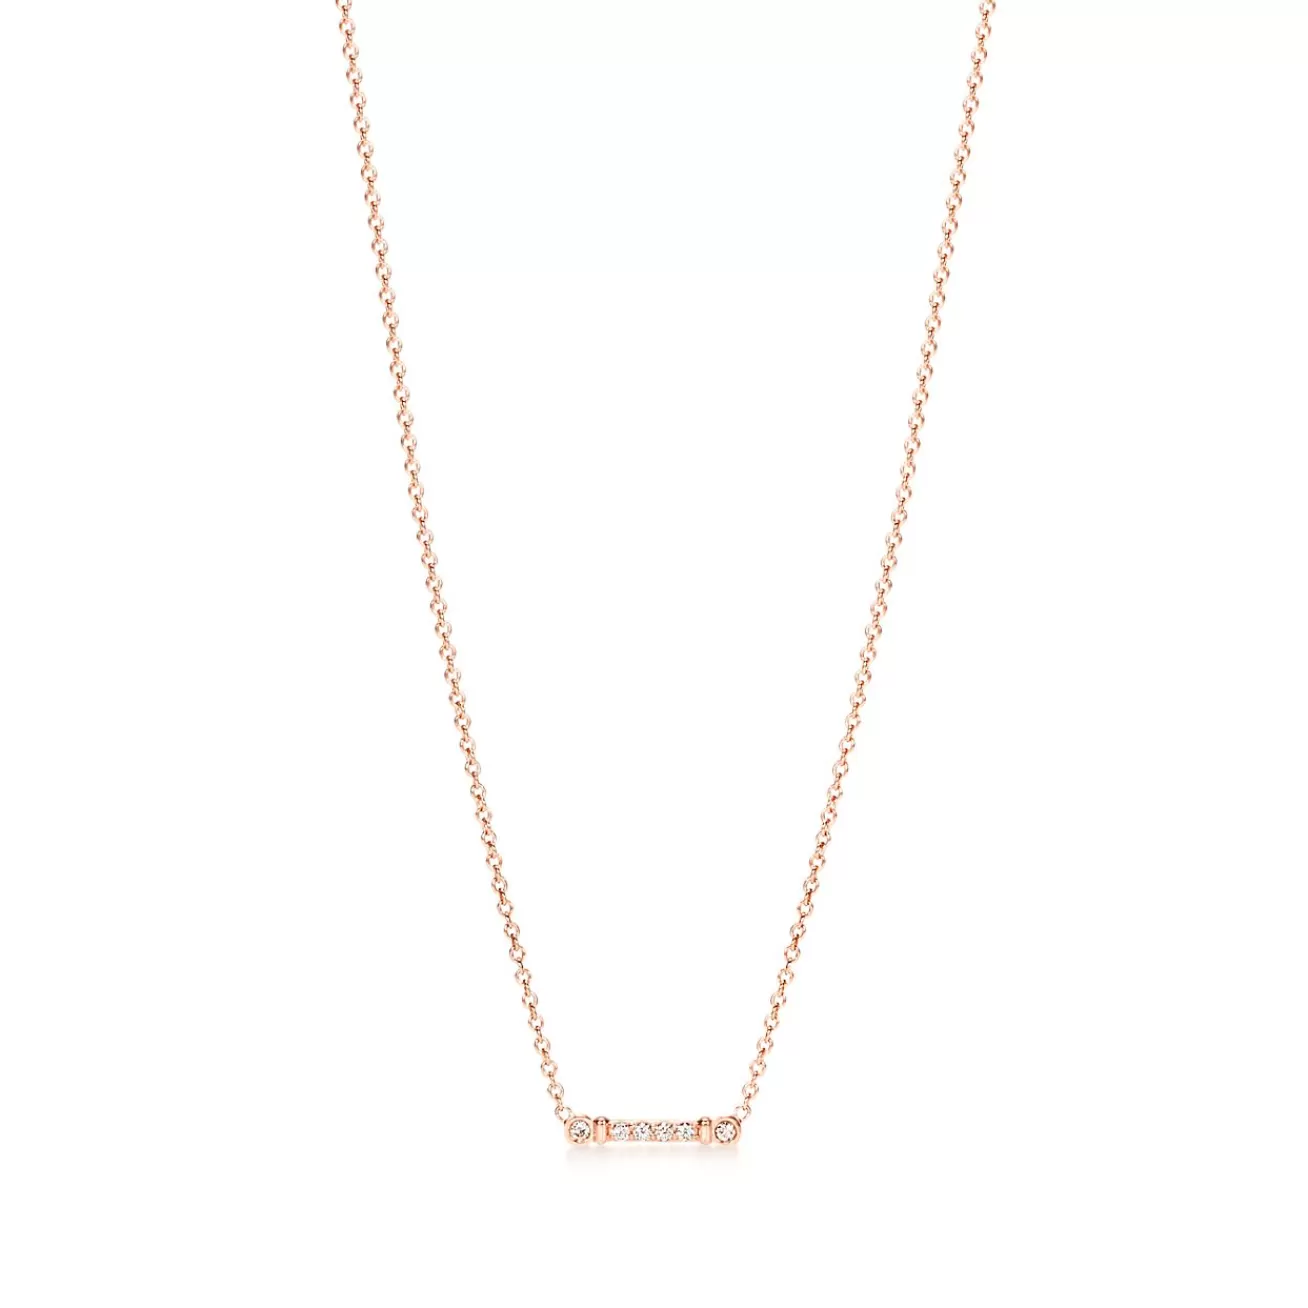 Tiffany & Co. Tiffany Fleur de Lis key bar pendant in 18k rose gold with diamonds. | ^ Necklaces & Pendants | Dainty Jewelry